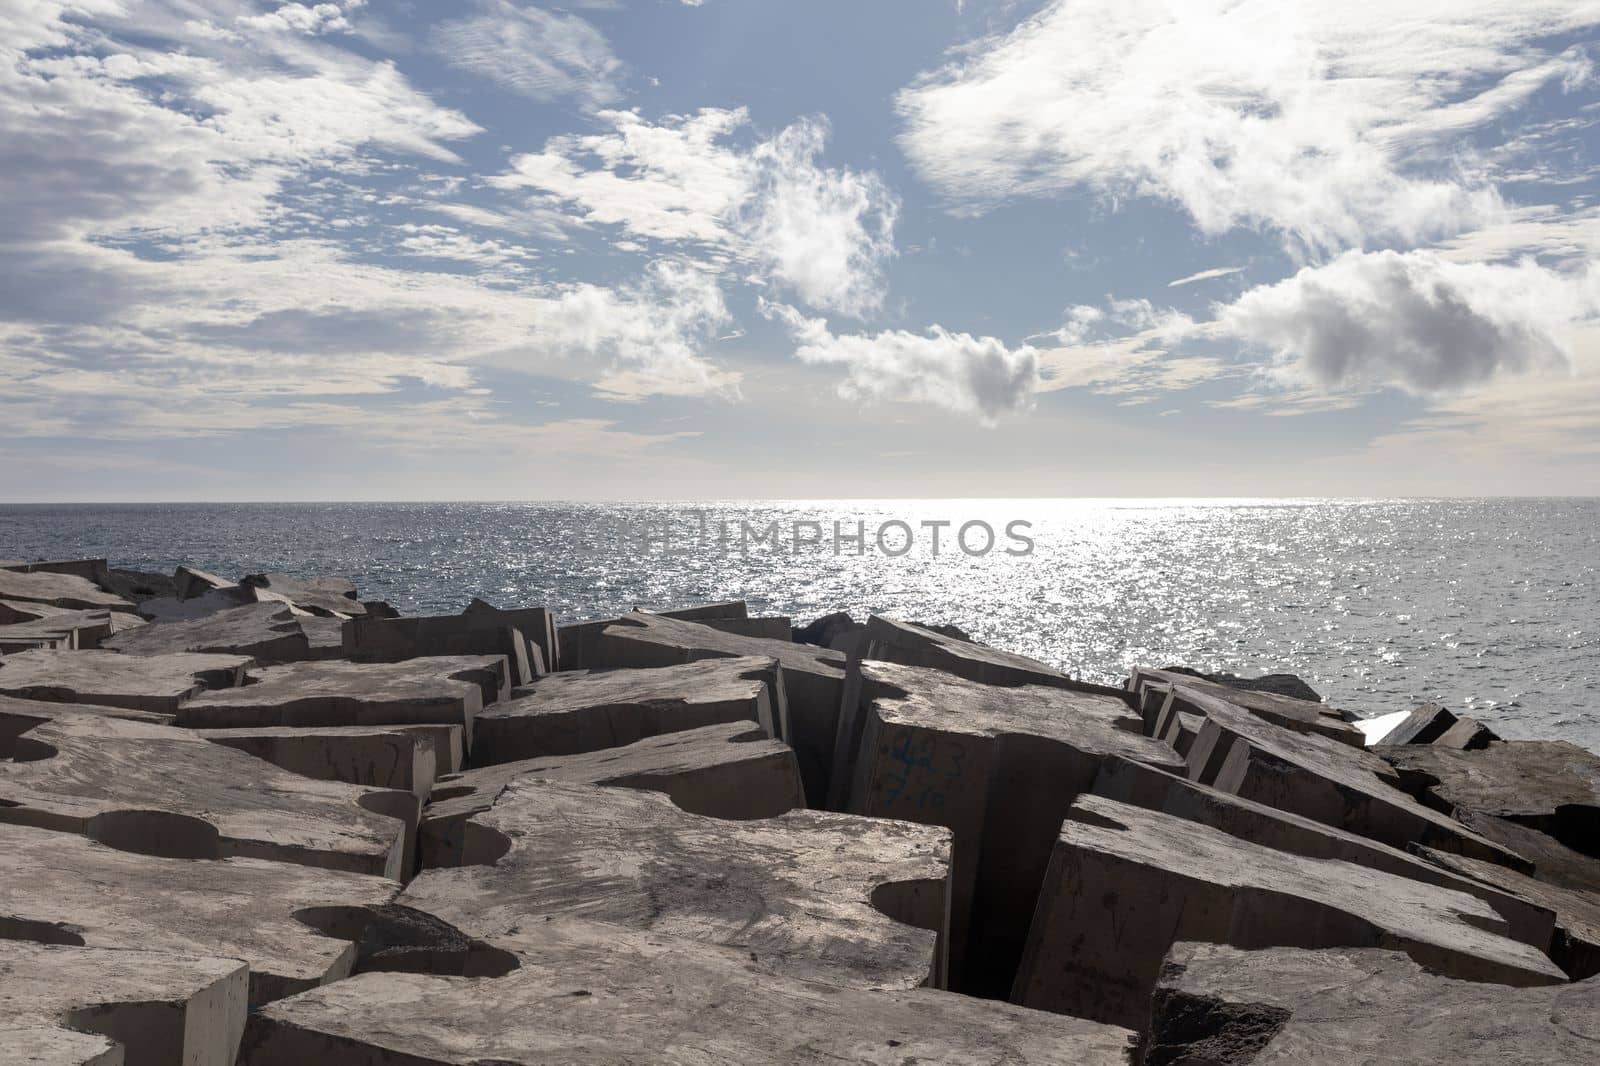 breakwater concrete blocks in the ocean sunny day by Chechotkin